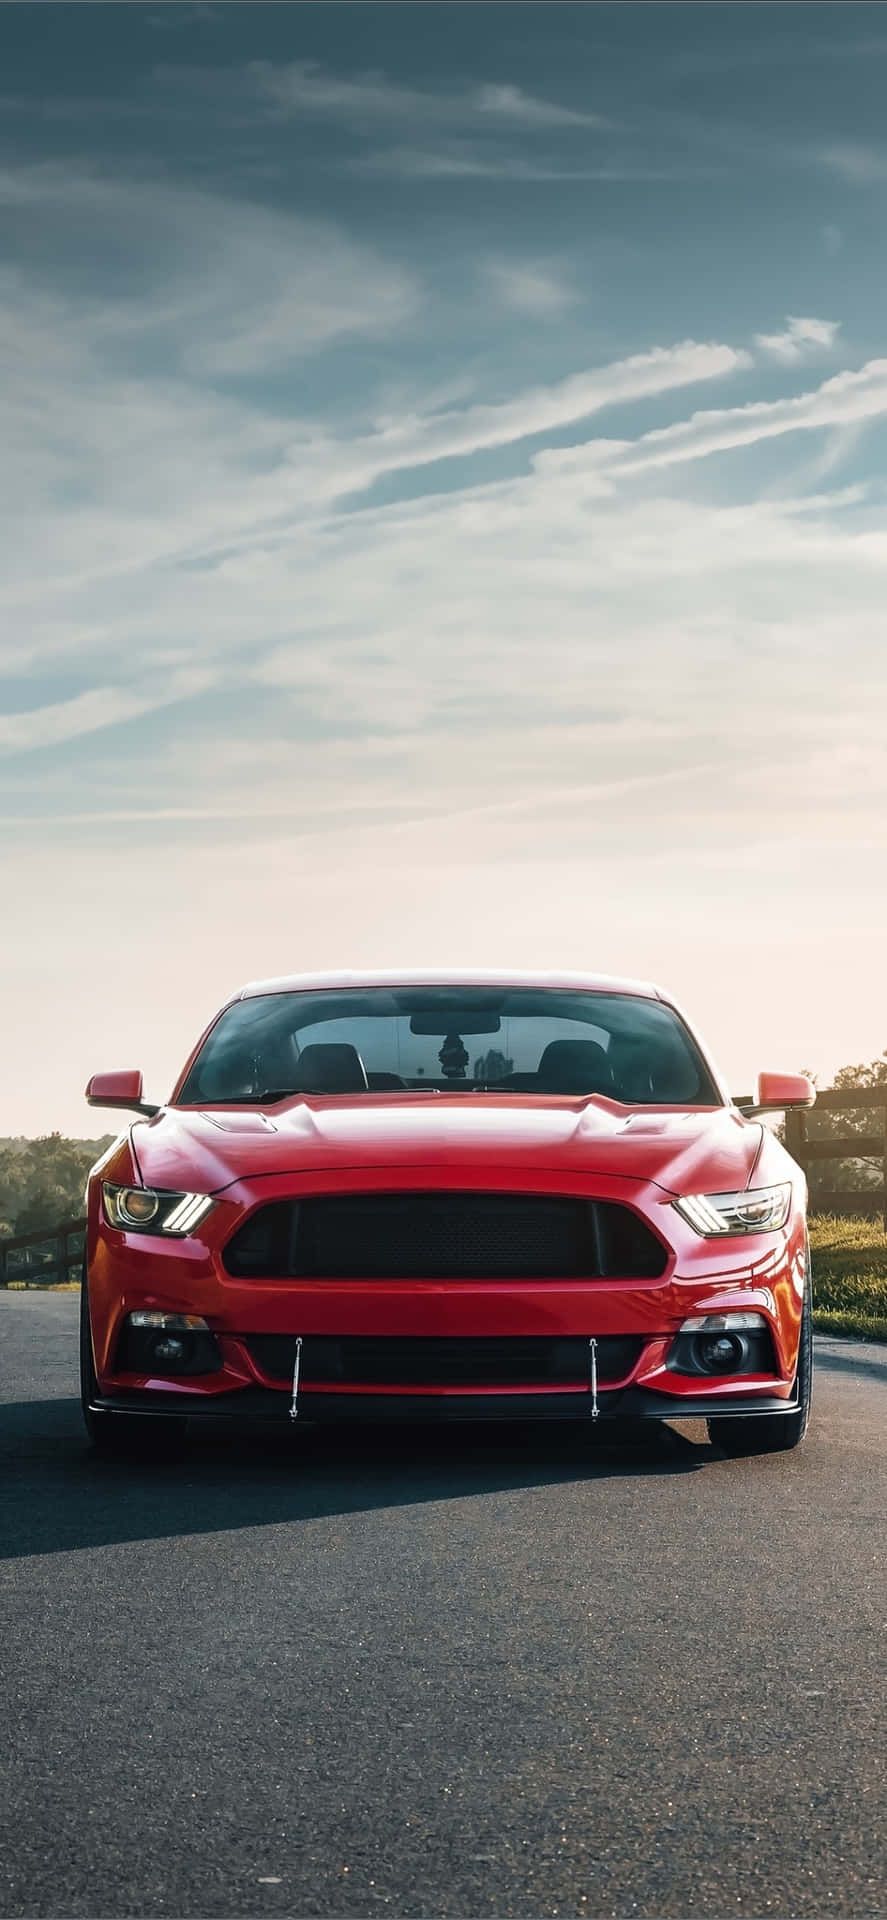 Ford Mustang 2019 Sports Car Model Wallpaper